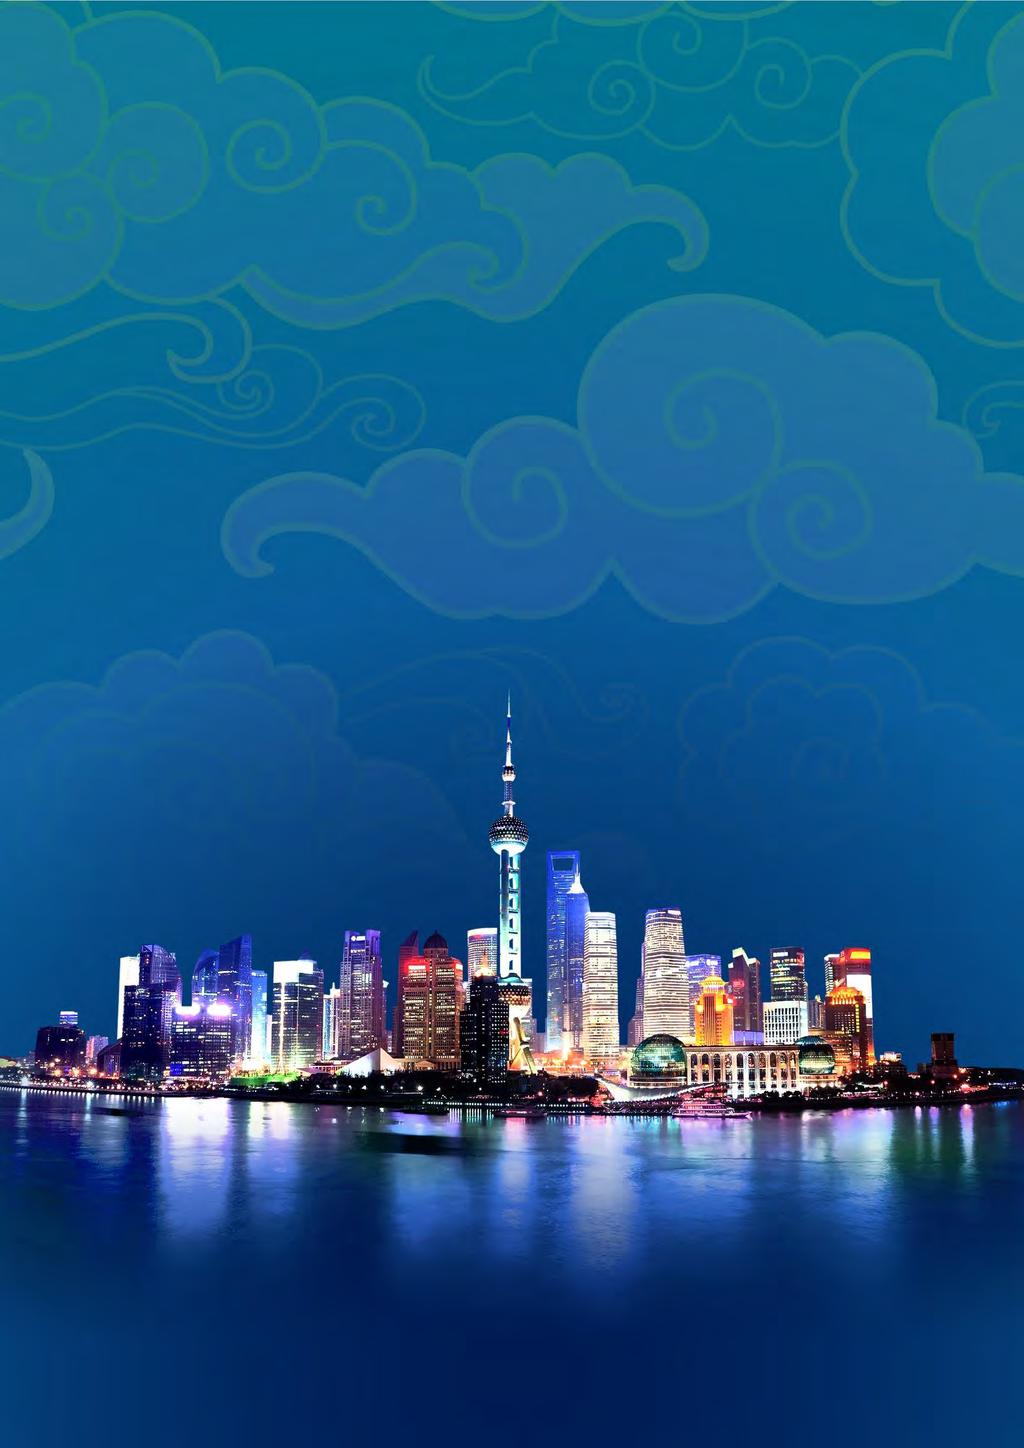 2018 上海国际景观照明论坛 Shanghai International City Lighting Summit 会后报告 Post Event Report 欢迎莅临上海 Welcome to Shanghai!